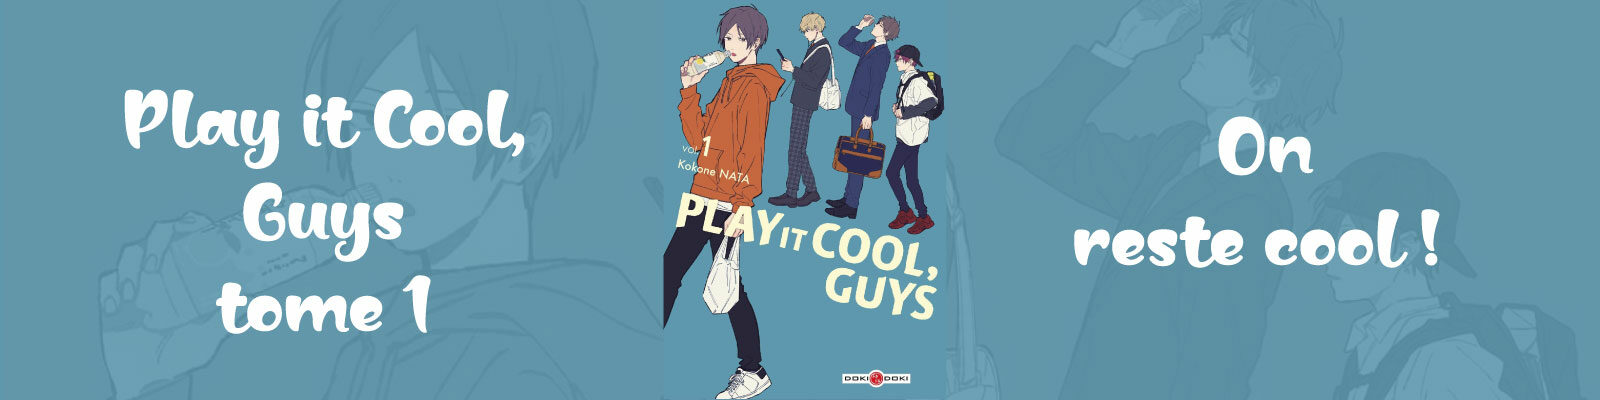 Play It Cool, Guys-Vol.1